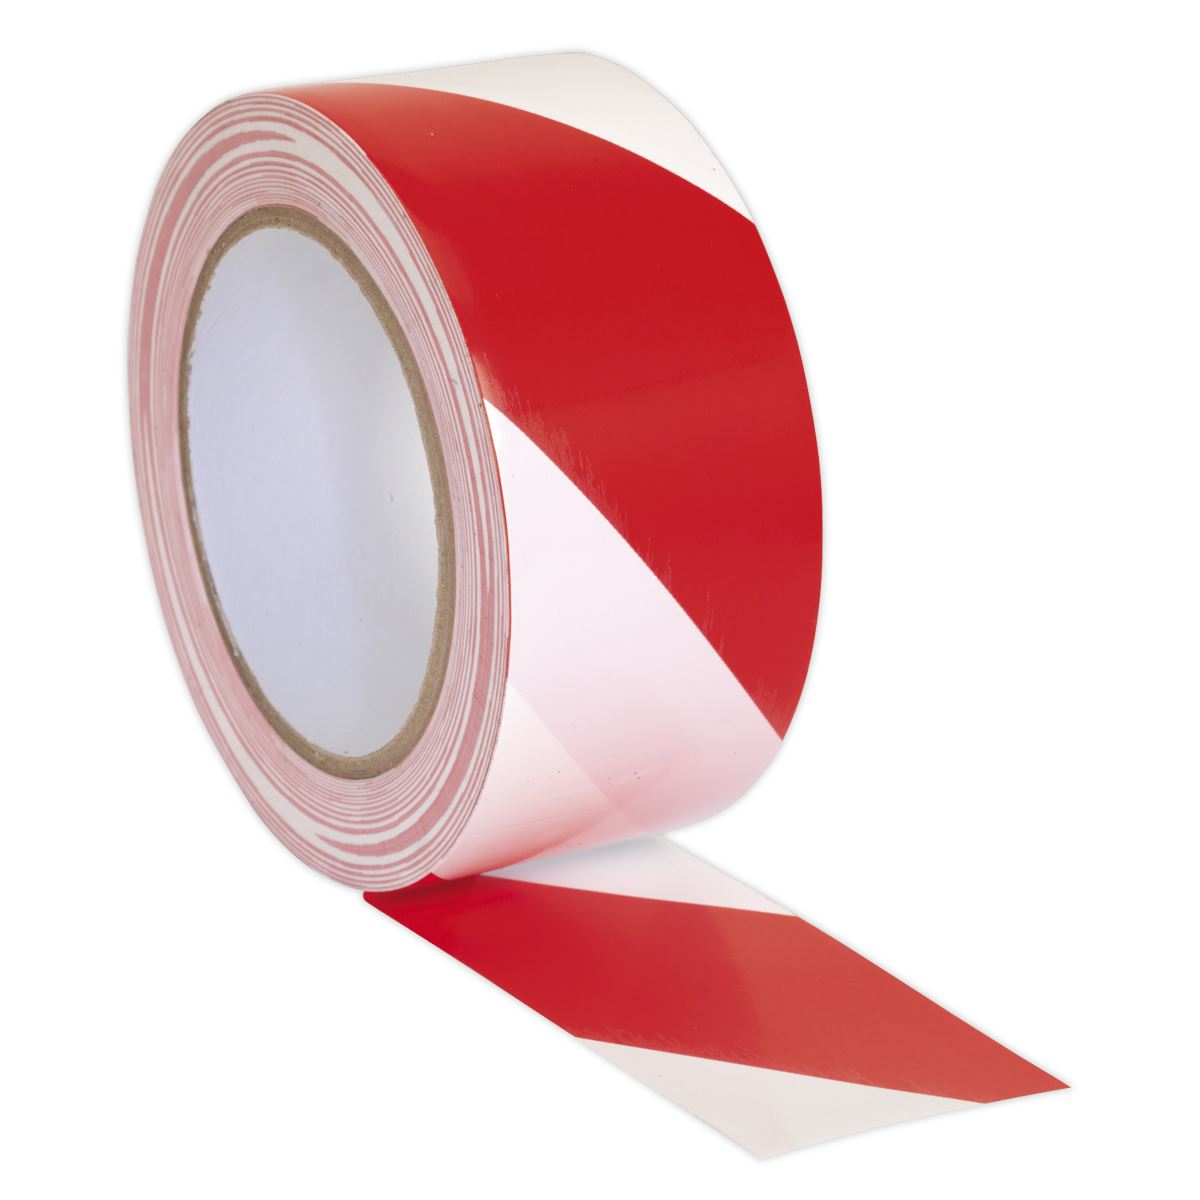 Sealey Hazard Warning Tape 50mm x 33m Red/White